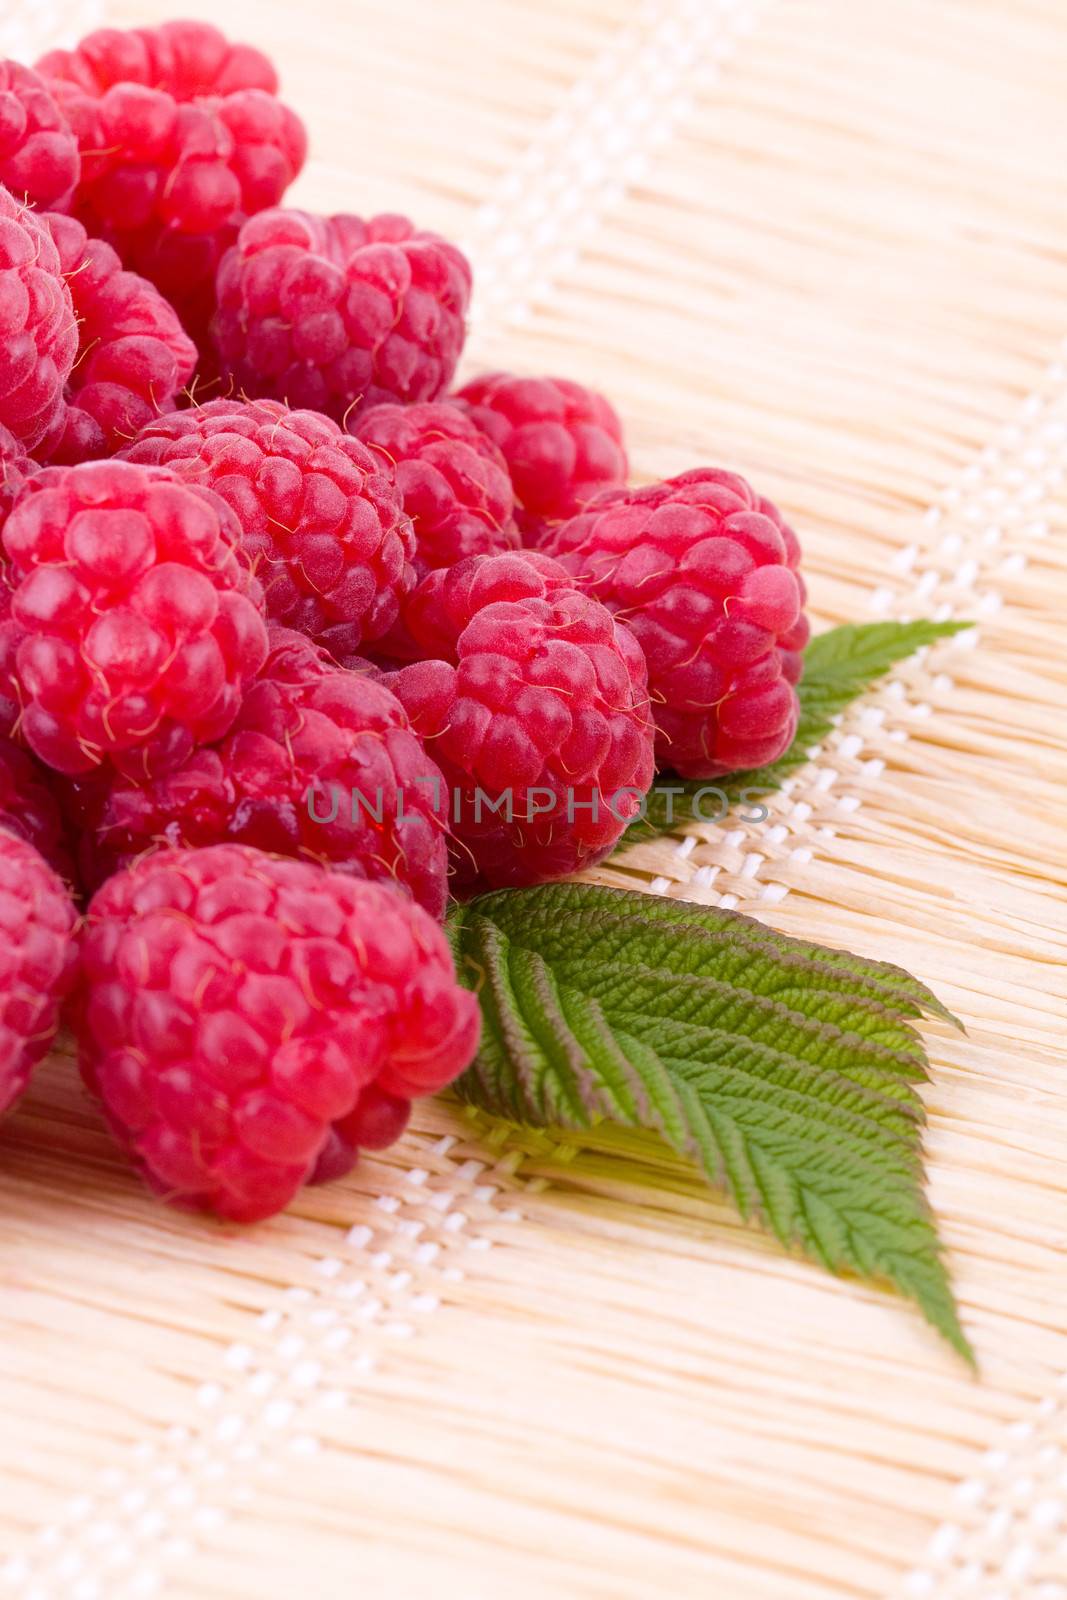 Raspberries on straw mat by Gbuglok